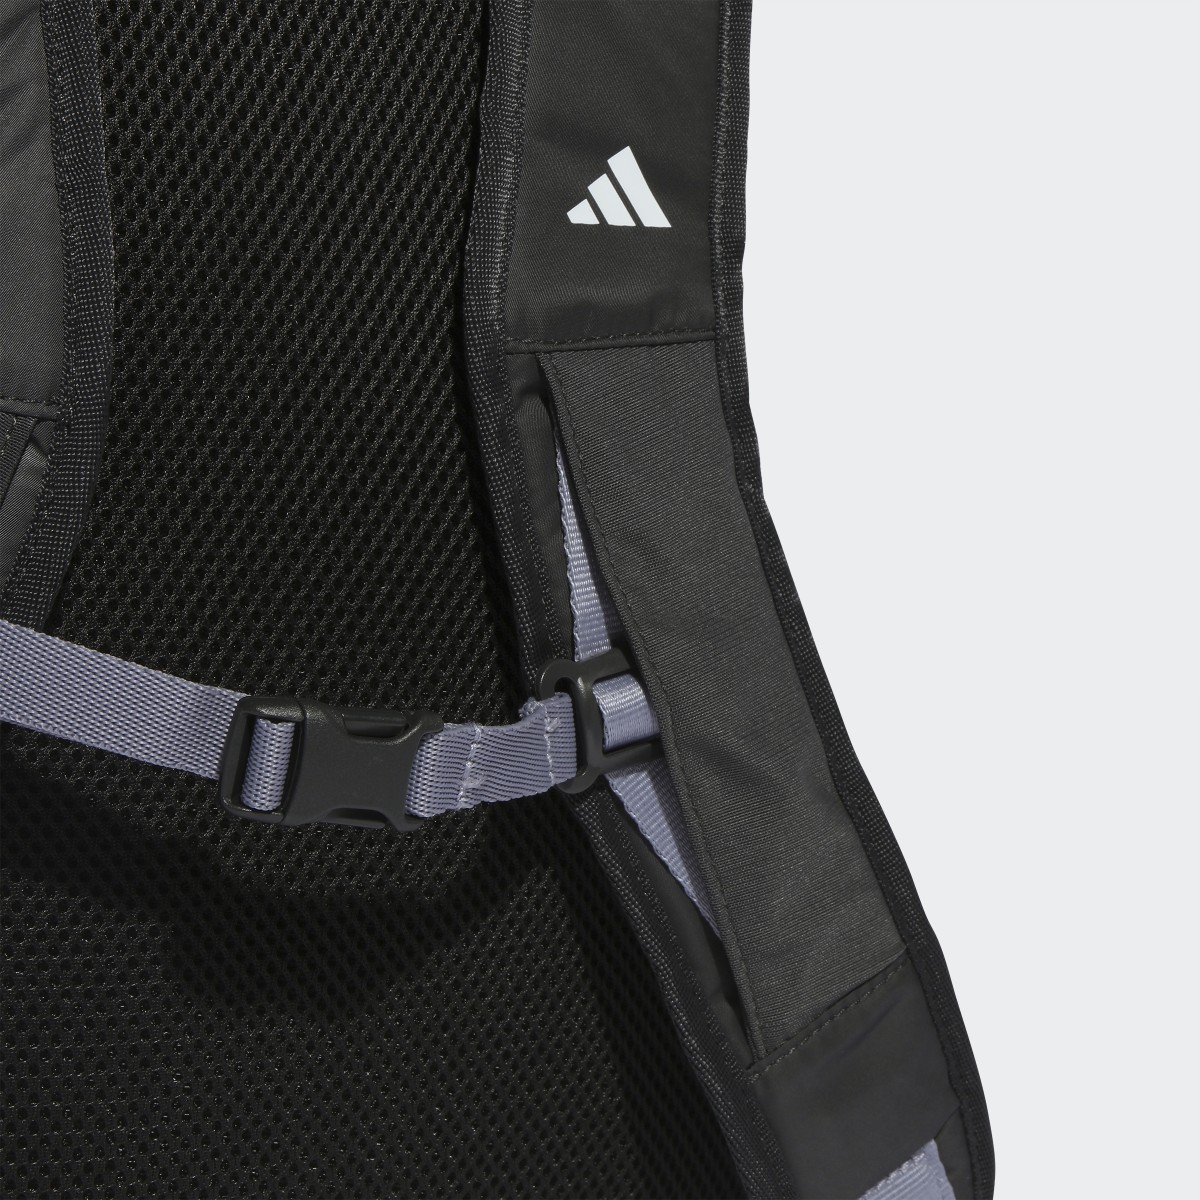 Adidas Designed for Training Gym Rucksack. 7